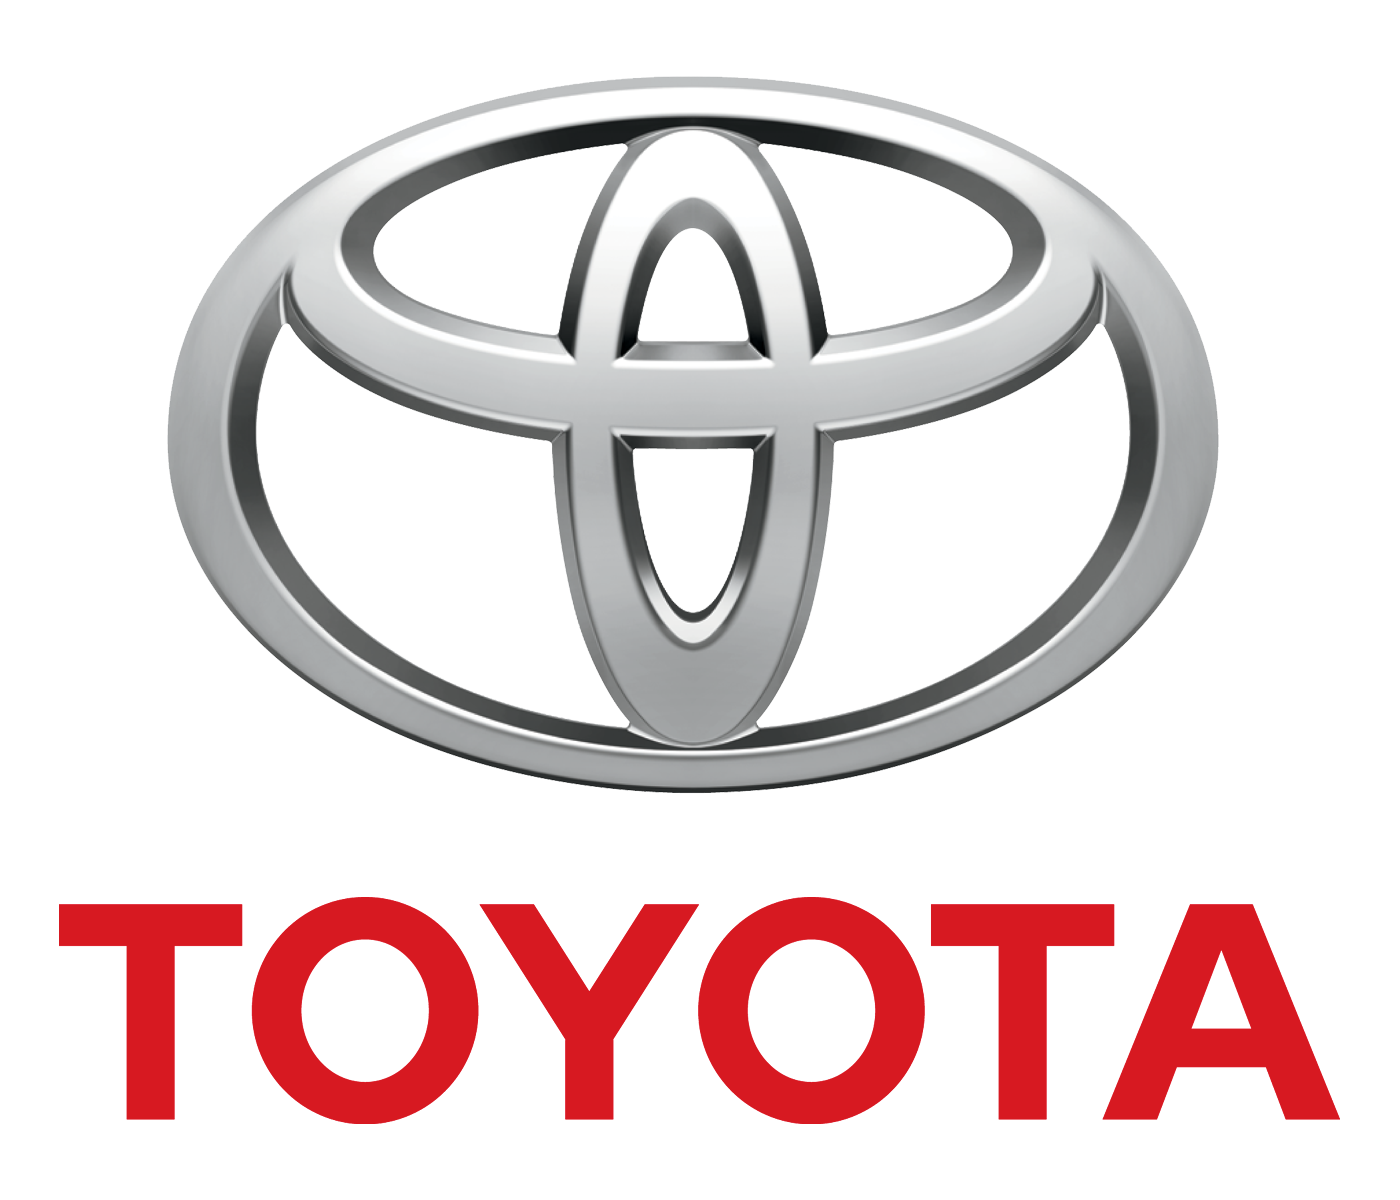 Toyota - Client